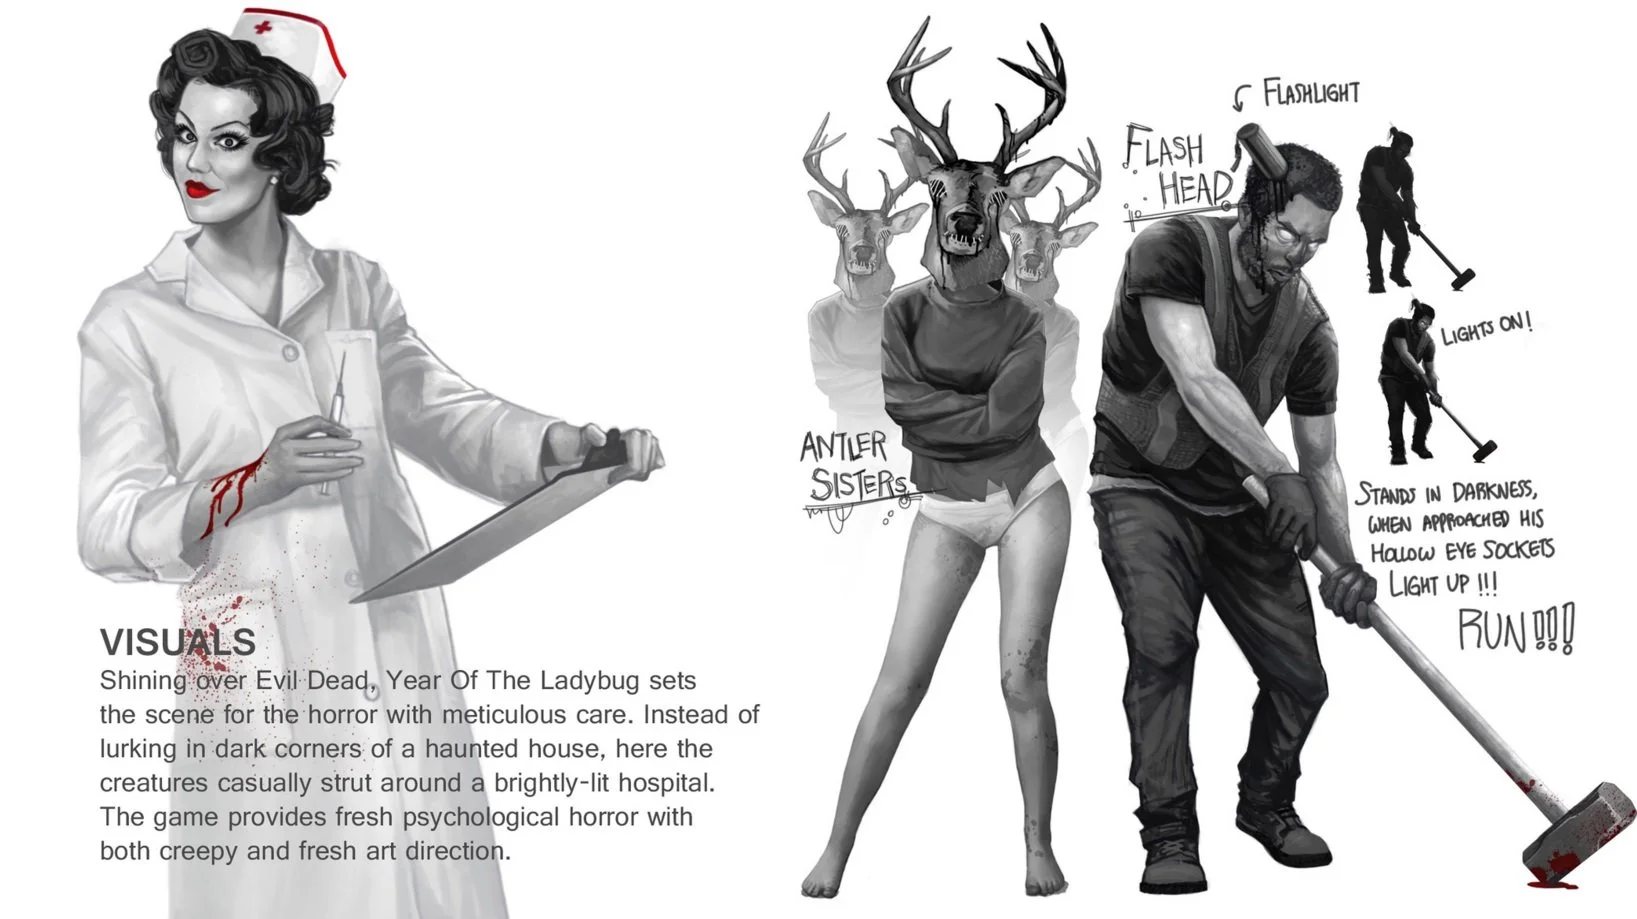 Year of the Ladybug: пугающий концепт наследницы Silent Hill - фото 2